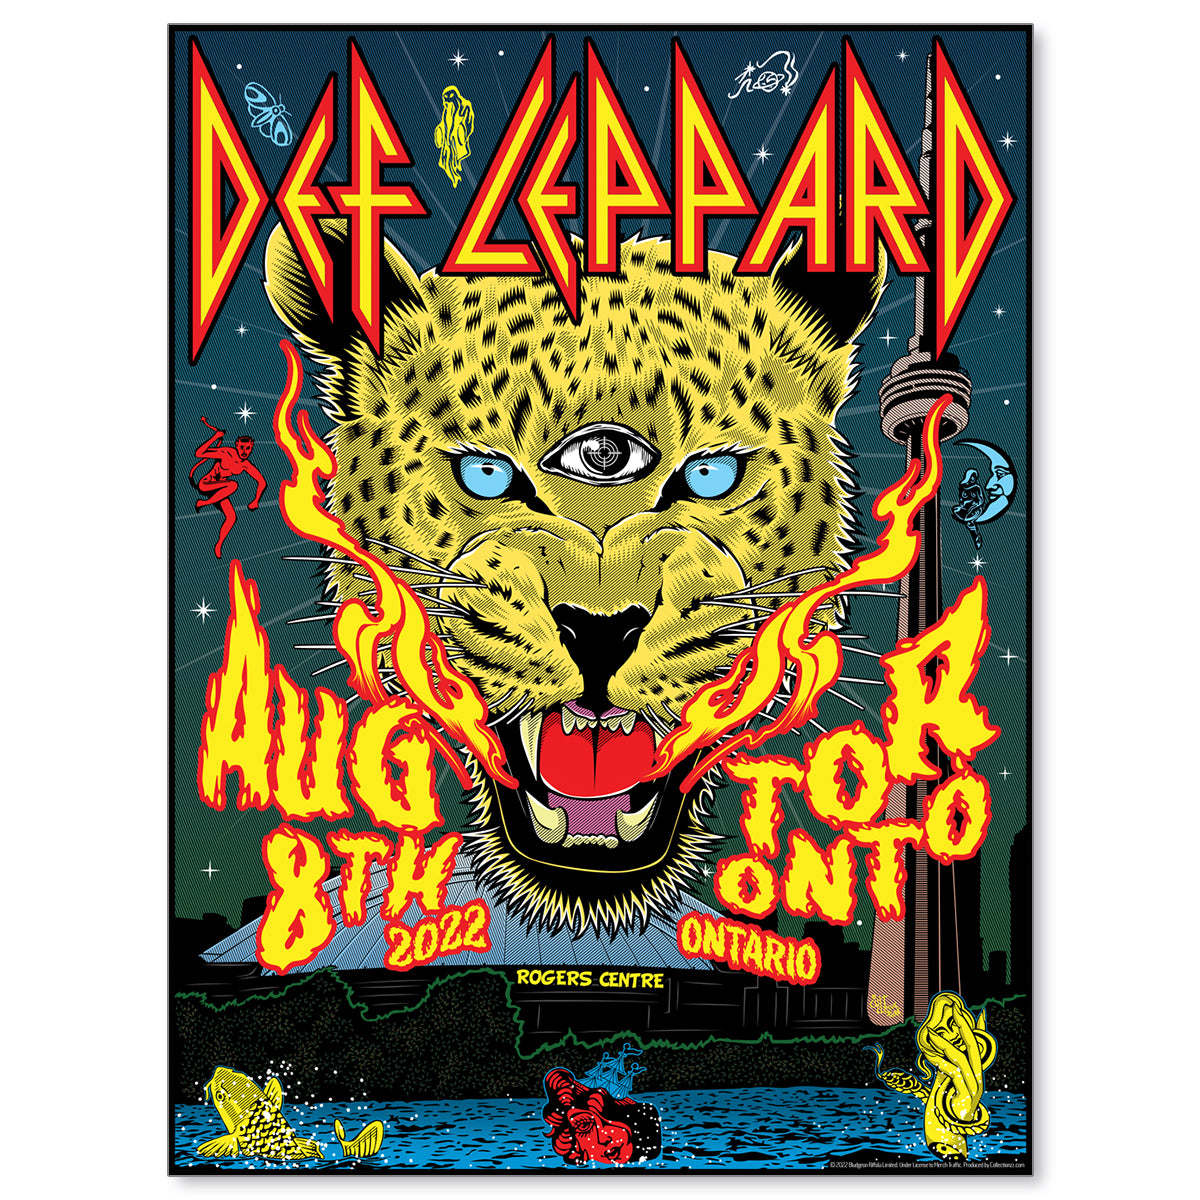 Def Leppard Toronto August 8, 2022 The Stadium Tour